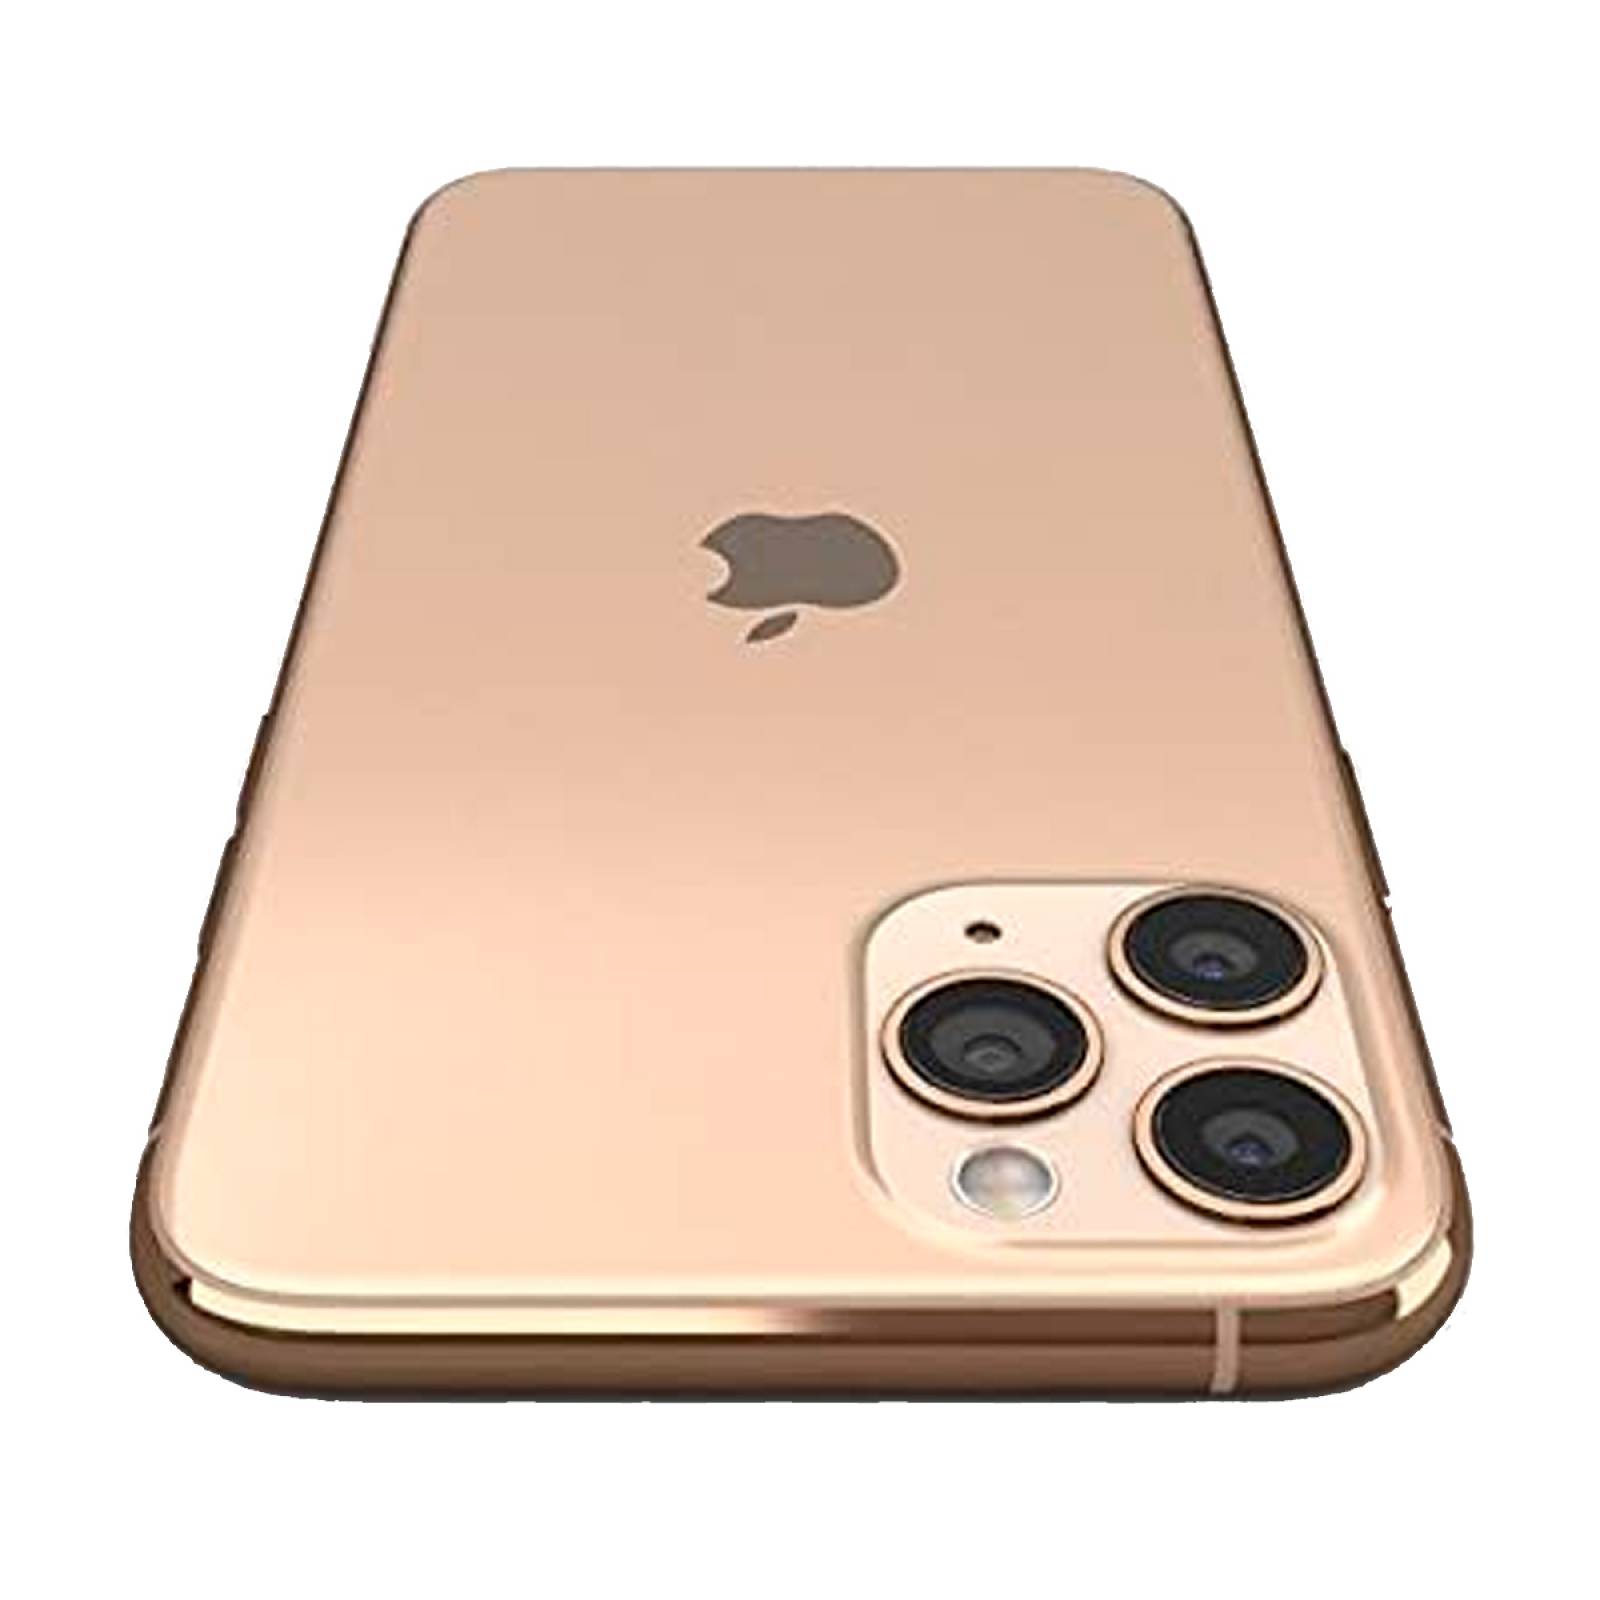 iPhone 7 Oro 256GB Reacondicionado + AirPods Pro AAA 